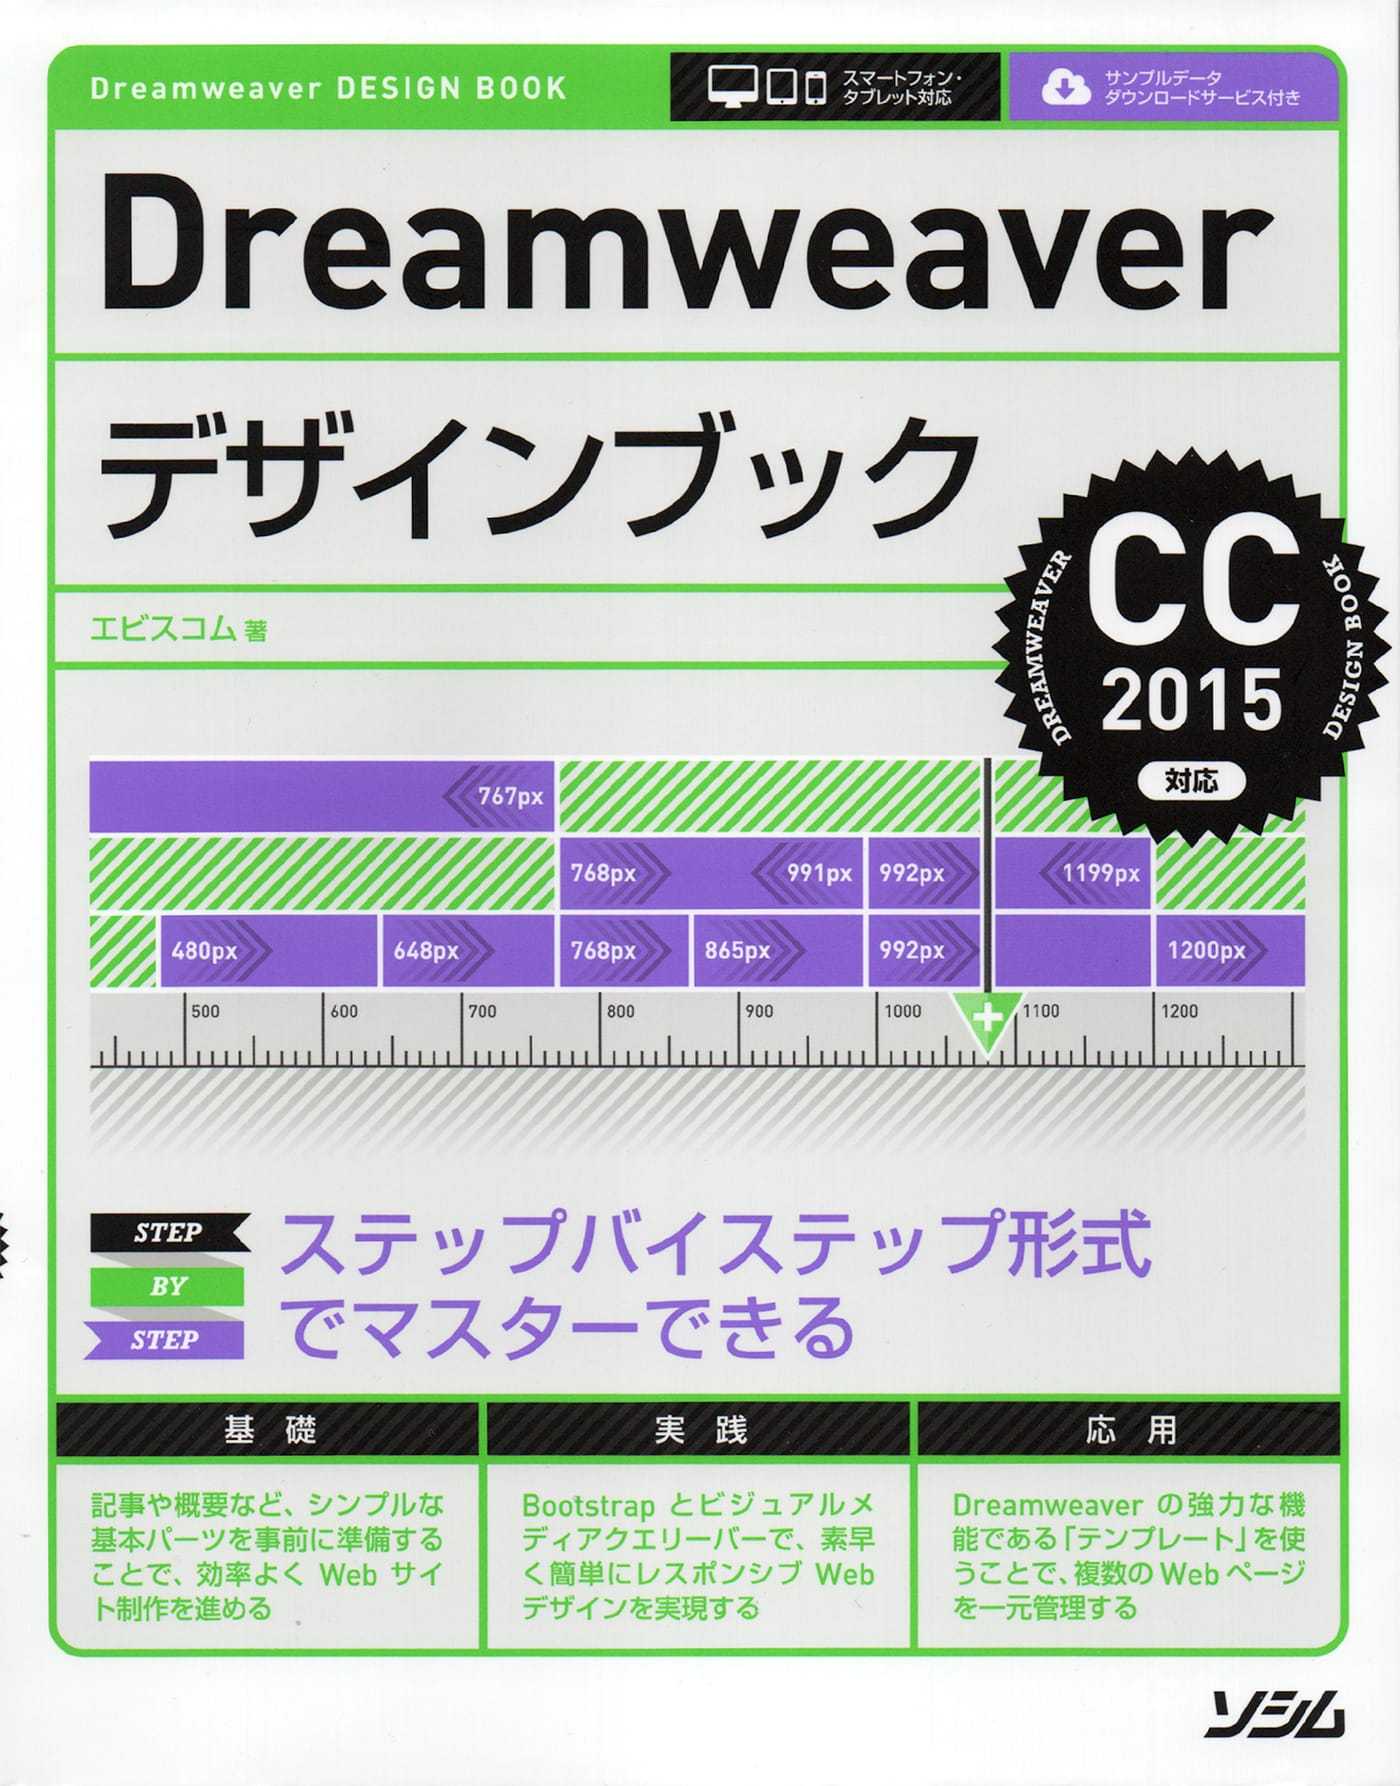 Dreamweaverデザインブック CC2015対応 | エビスコム - EBISUCOM